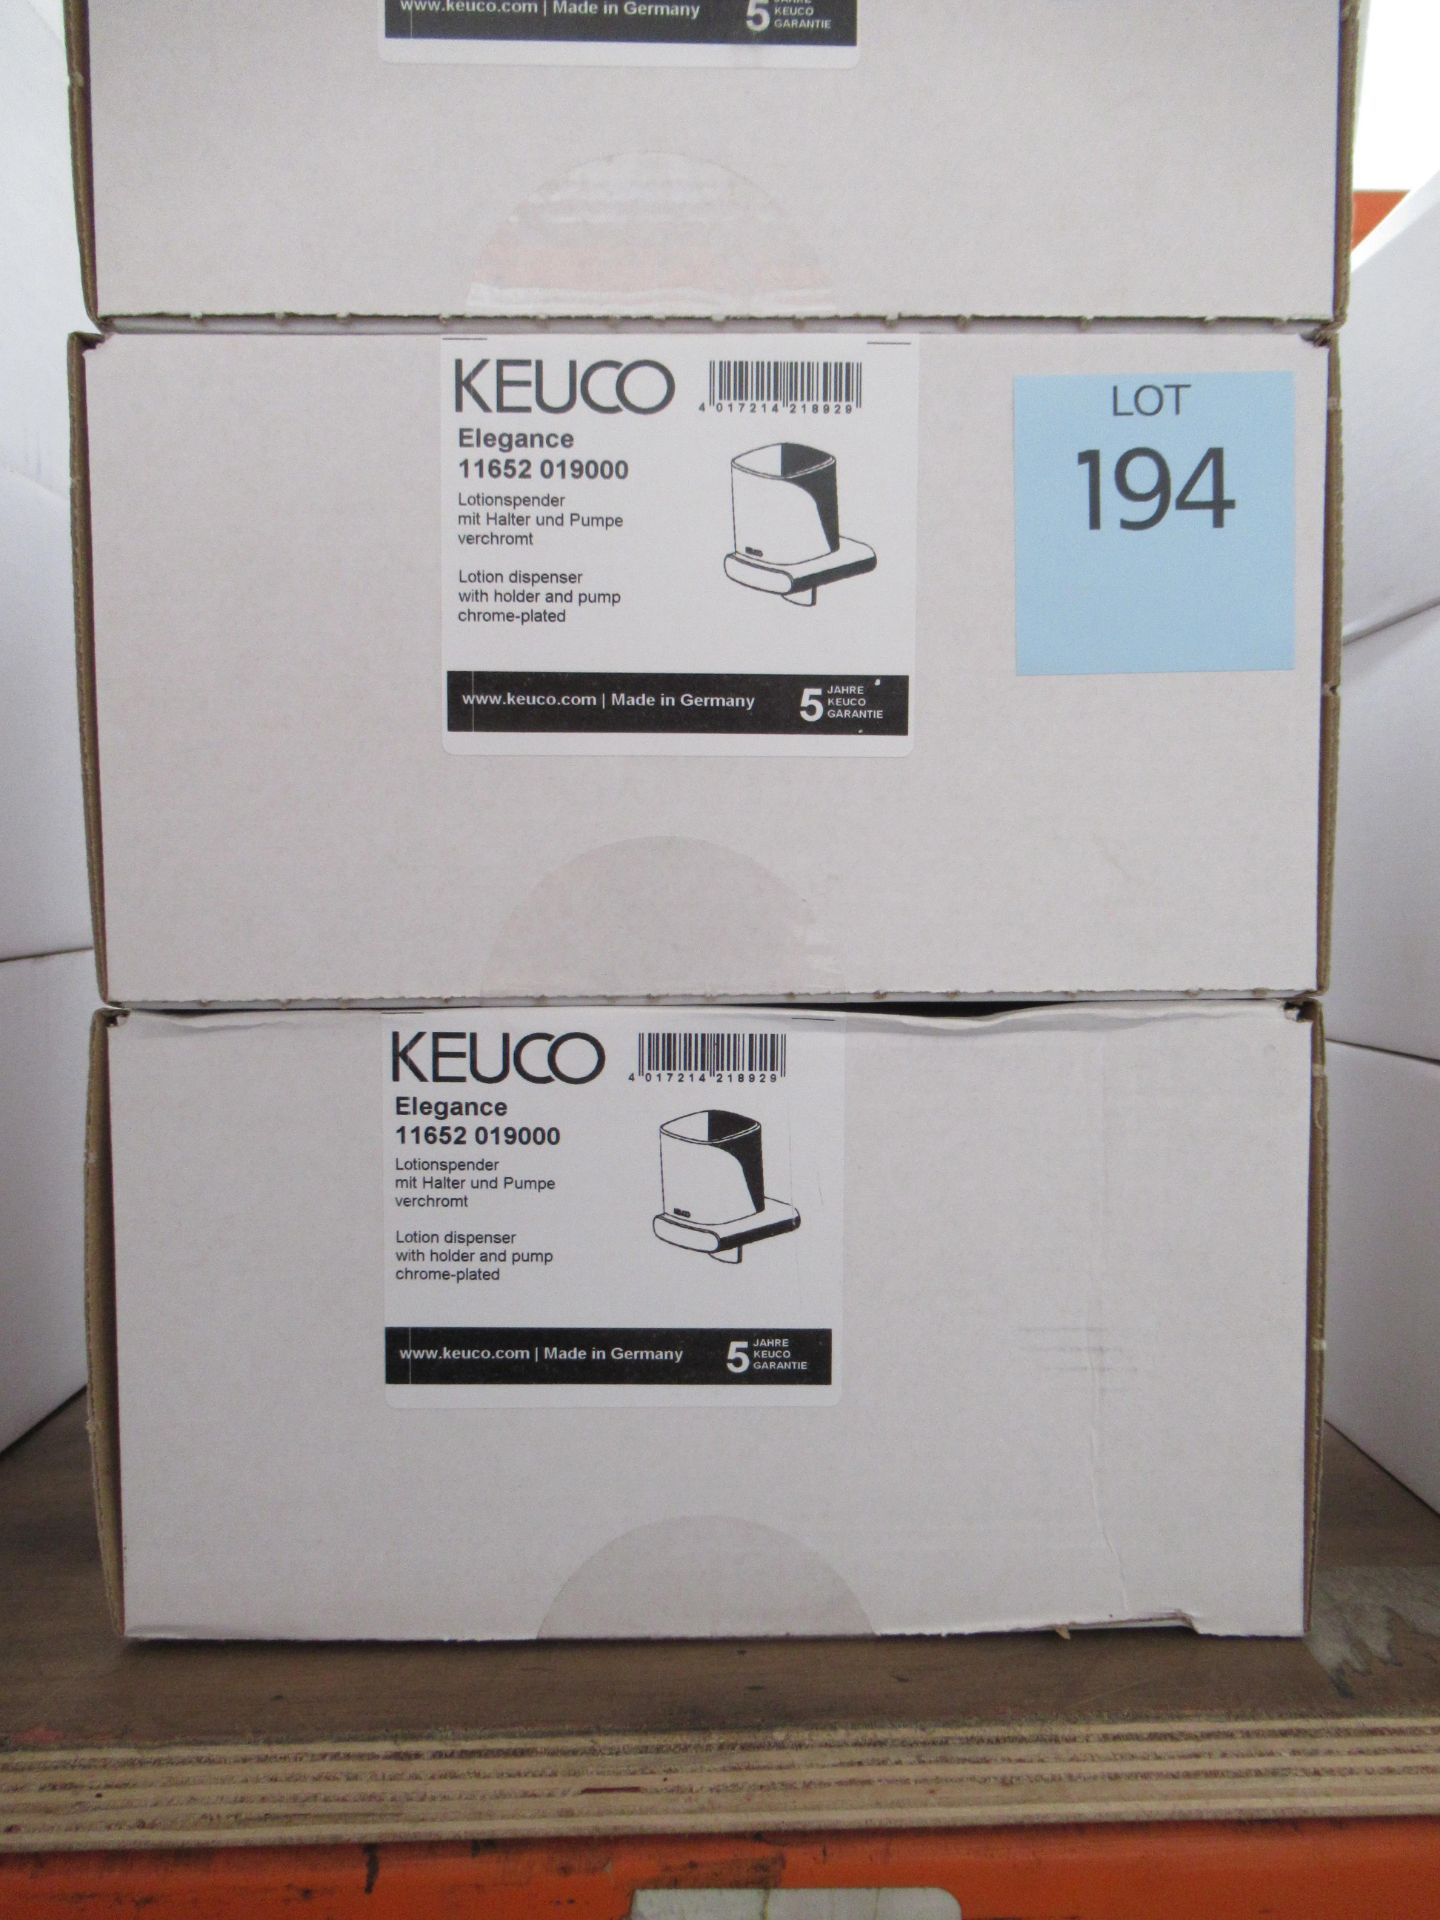 2 x Keuco Elegance Lotion Dispenser Chrome Plated, P/N11652-019000 - Image 2 of 2